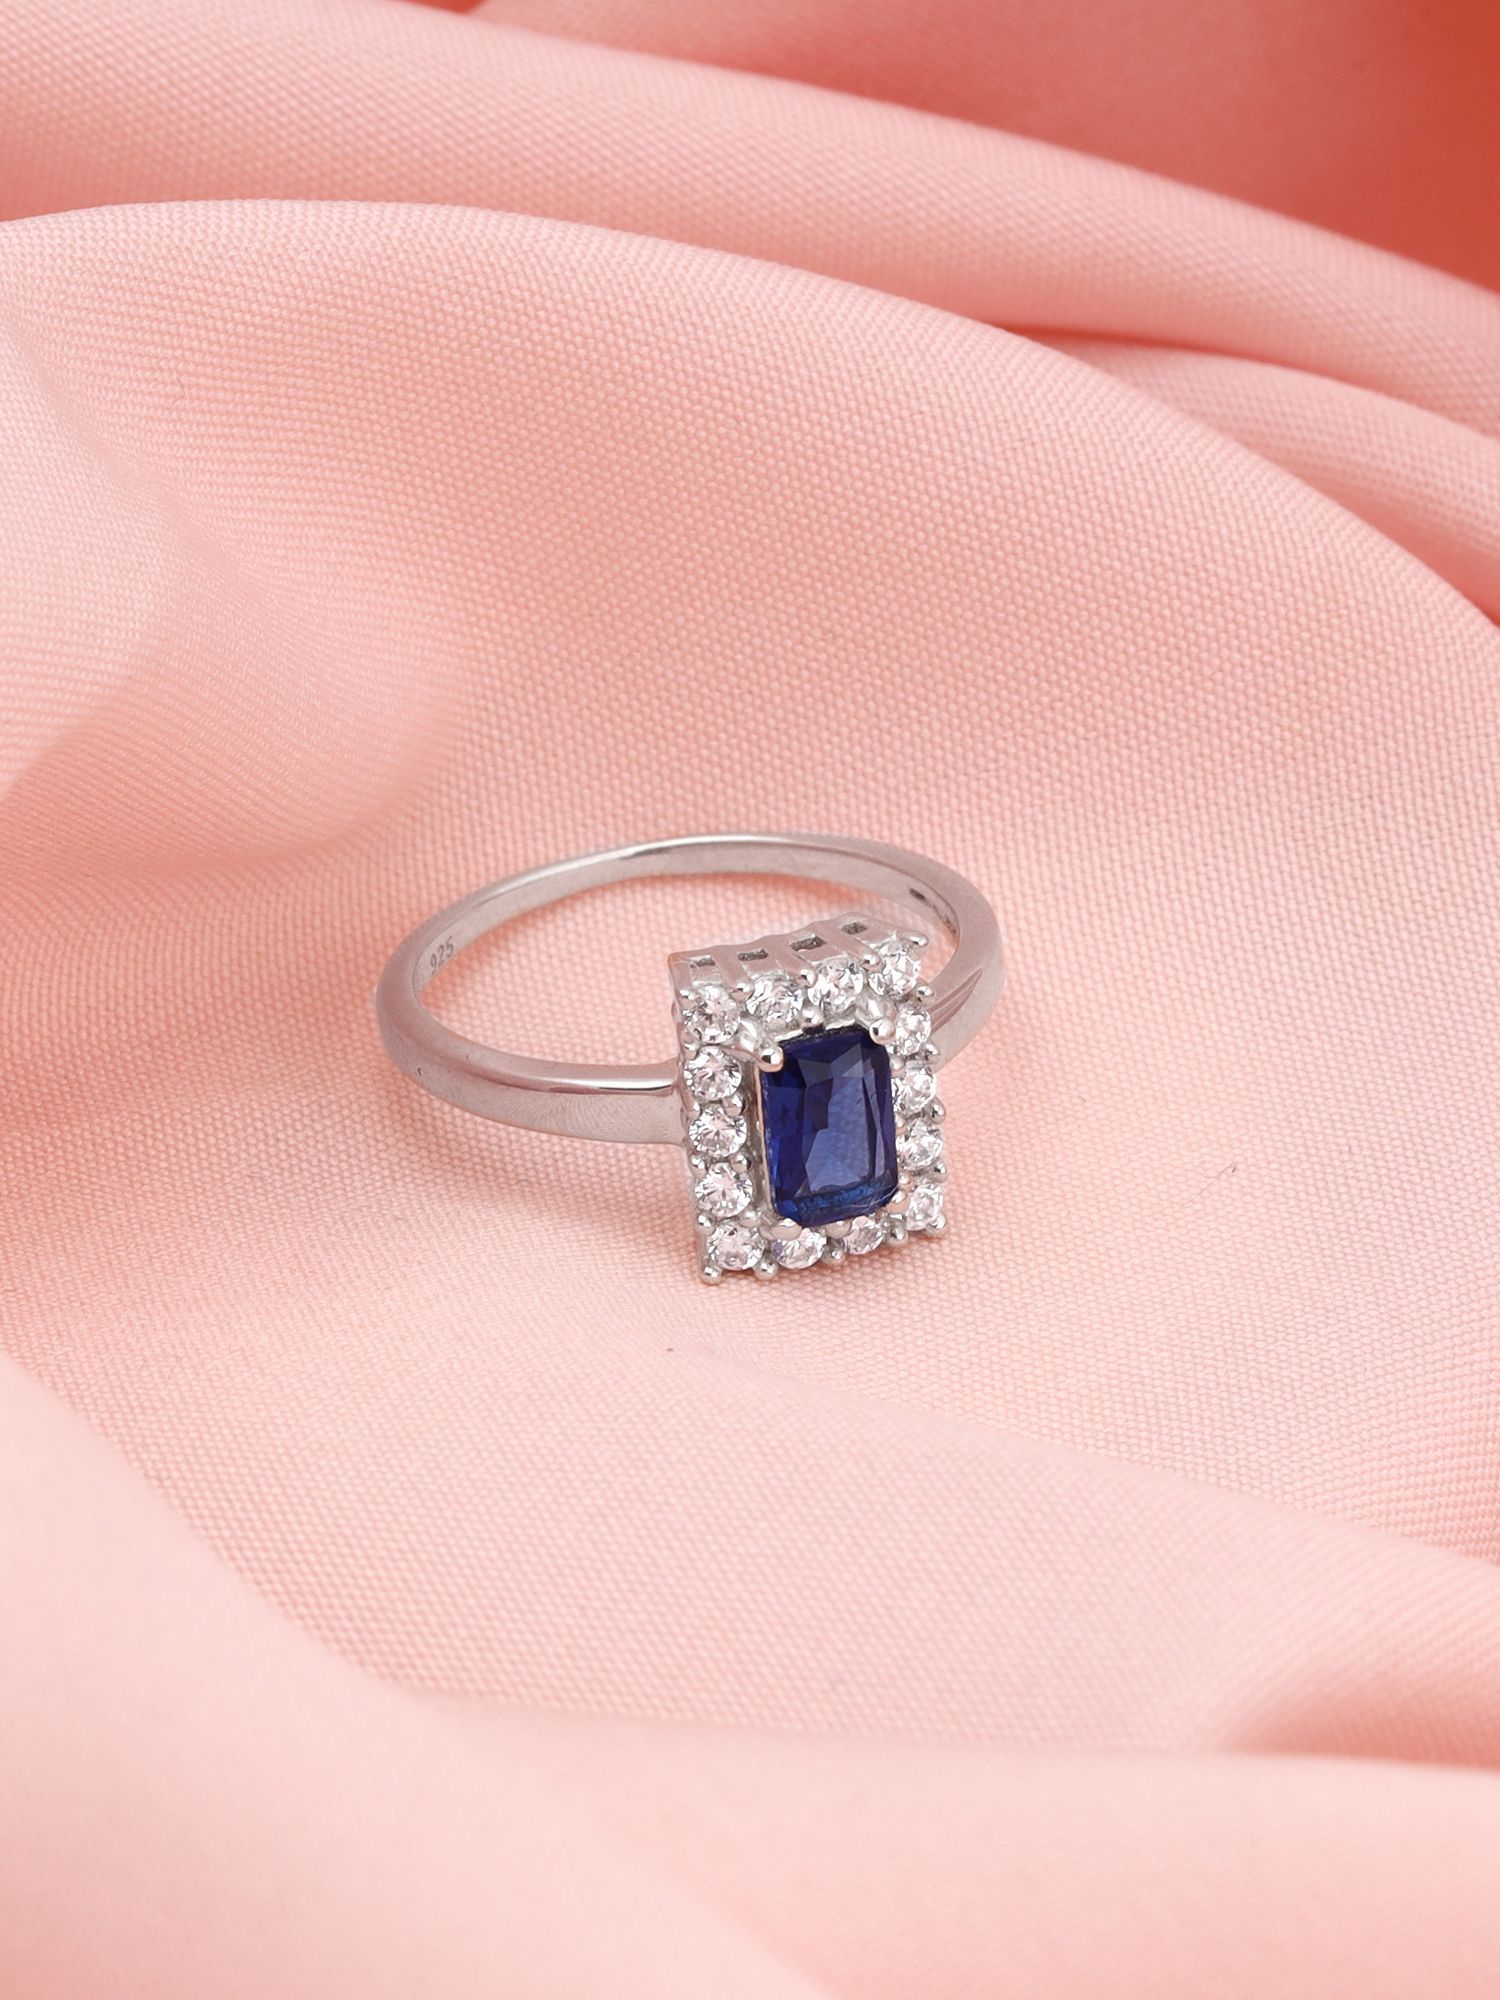 Vintage Natural London Blue Topaz Stone Ring,Statement Ring,925 Sterling  Silver | eBay